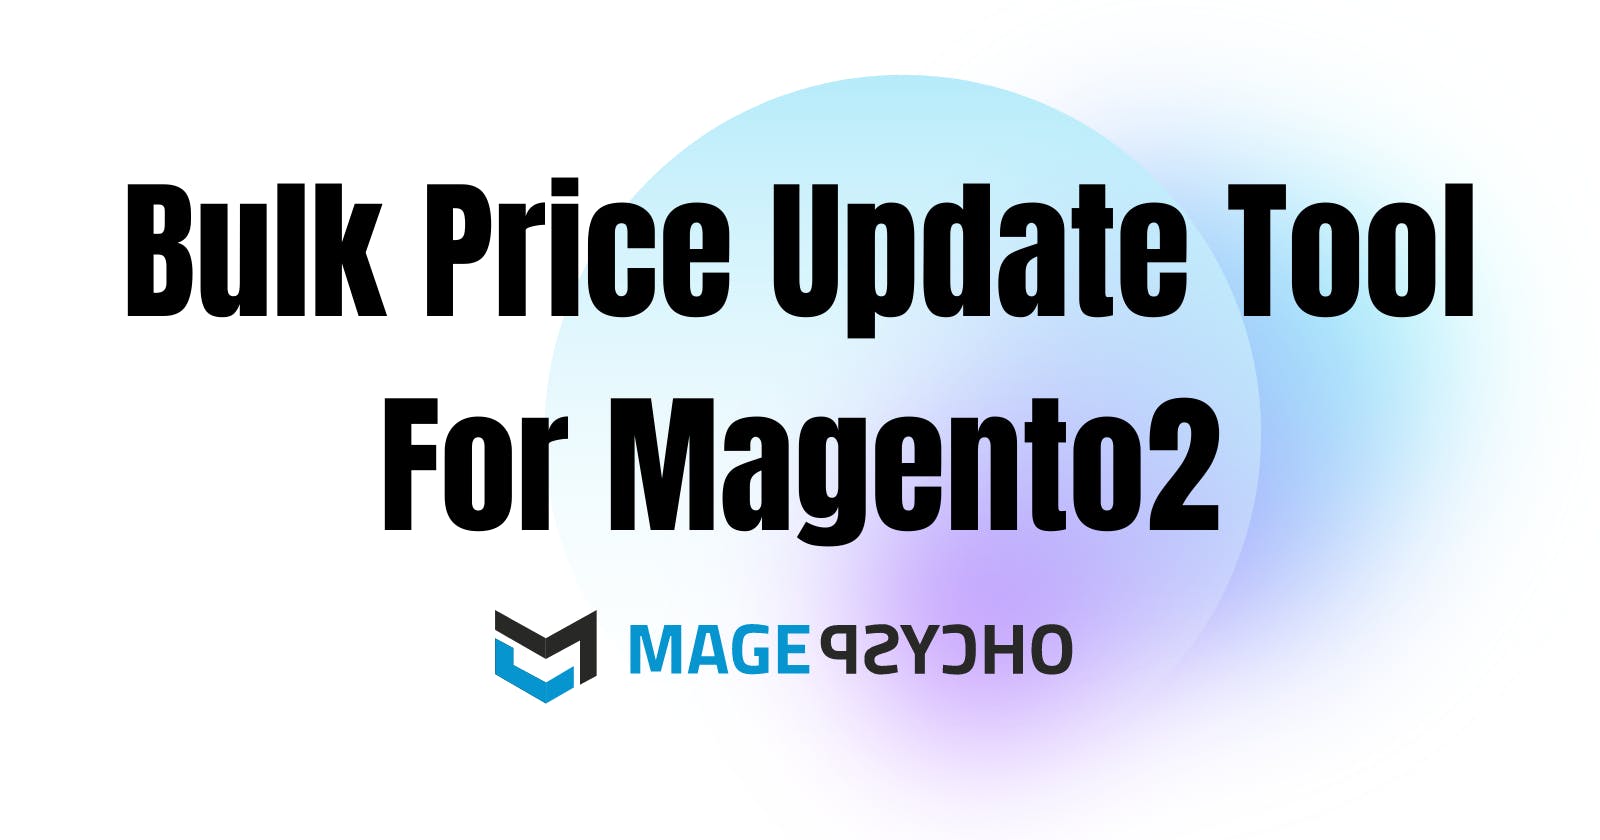 Bulk Price Update Tool For Magento2